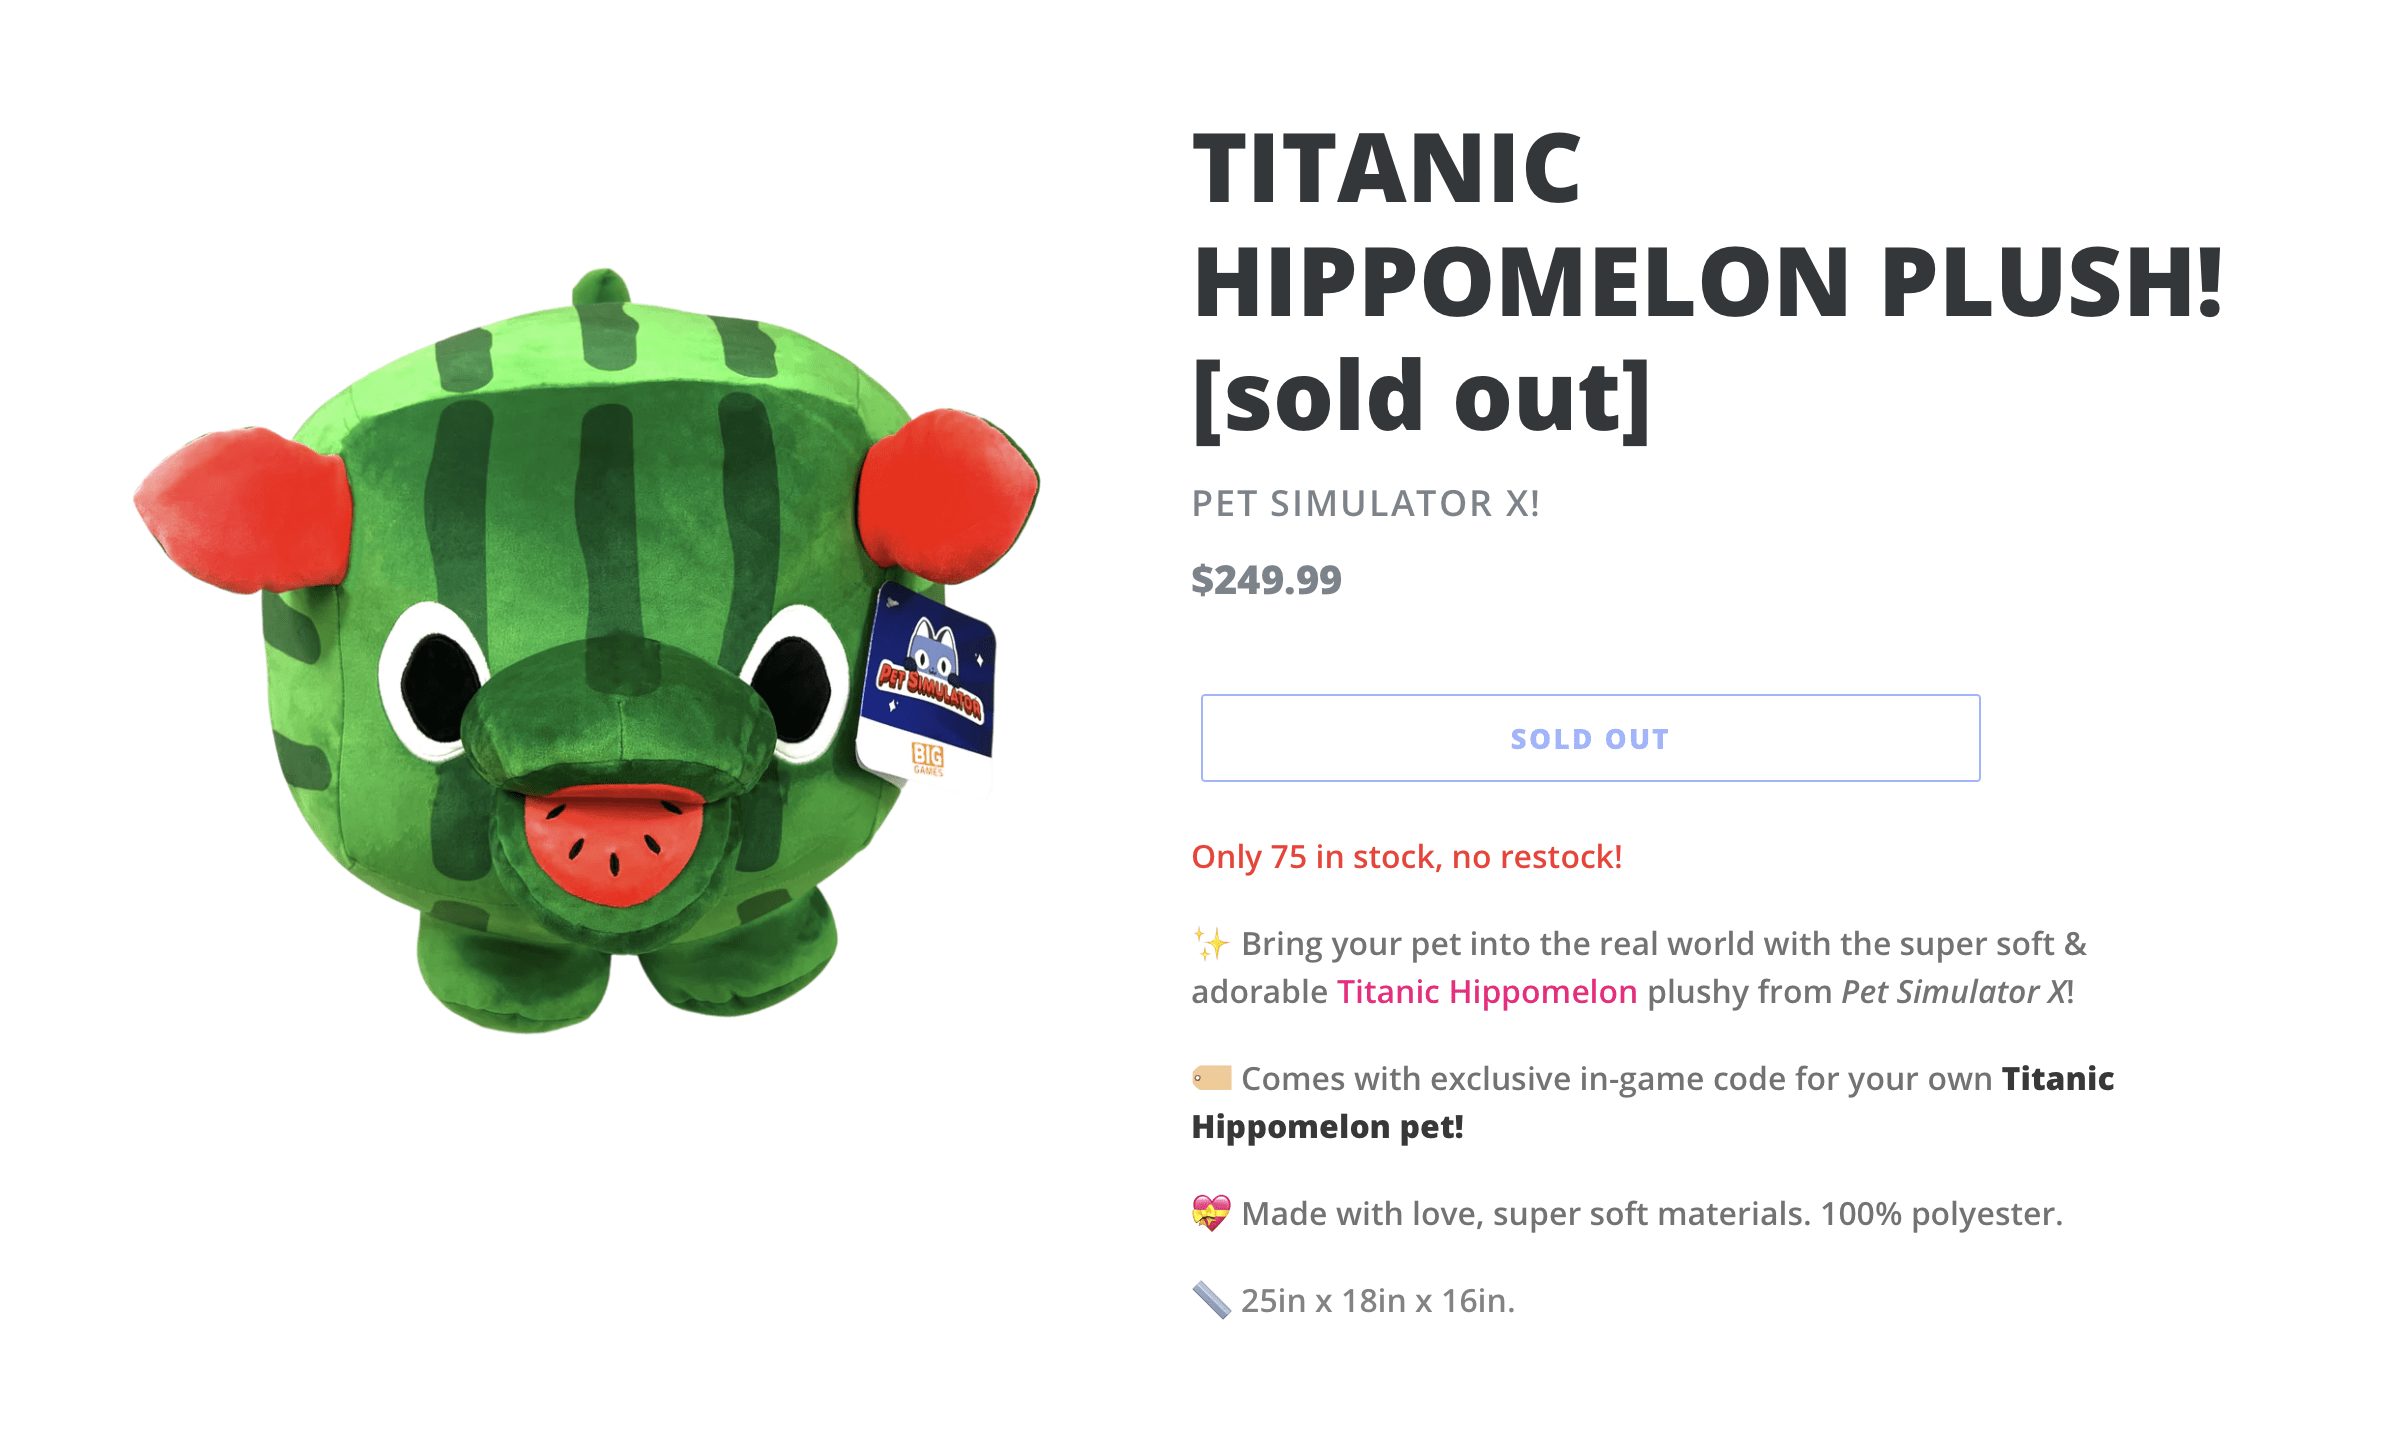 Pet Simulator X Hippomelon Plush Sold Out